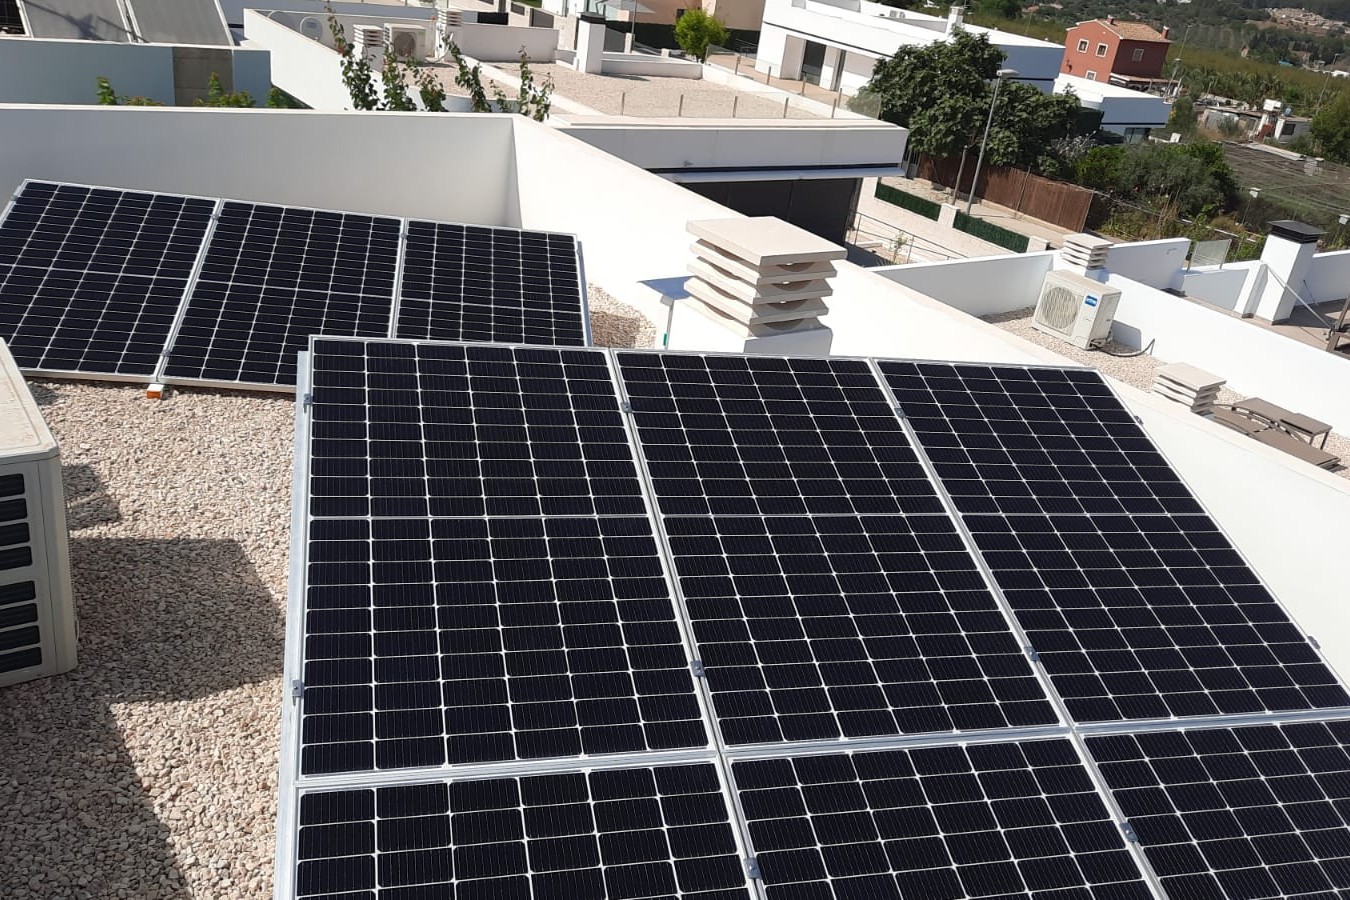 9X 380 wp Solar Panels, Polop, Alicante (Grid system)